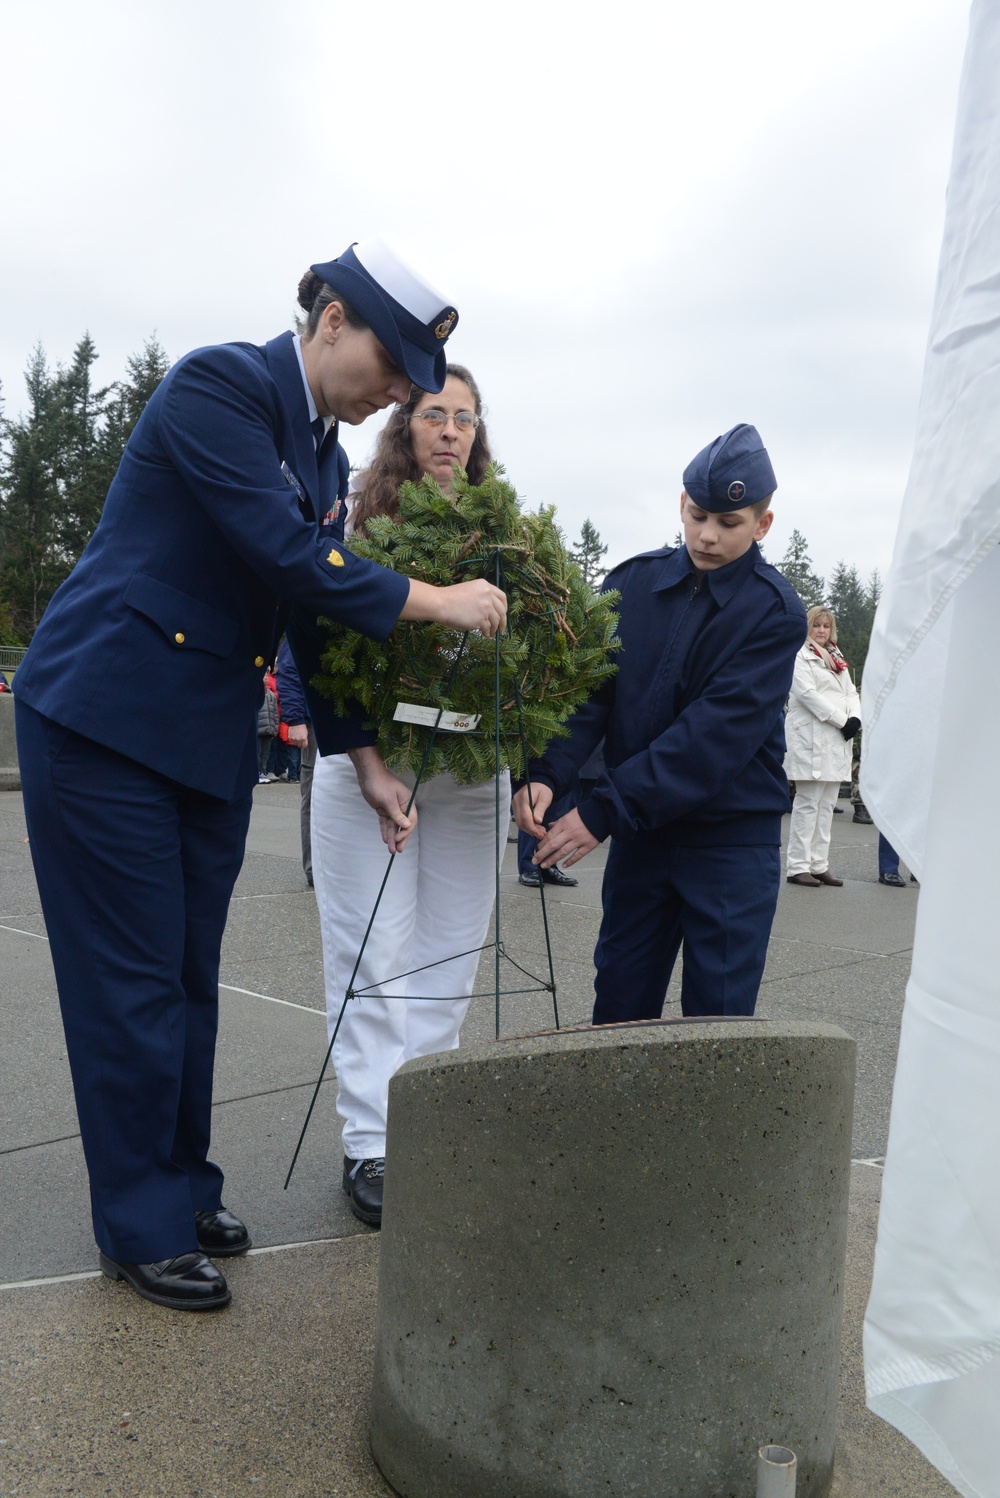 Coast Guardsman participates in Wreaths Across America ceremony in Kent, Washington